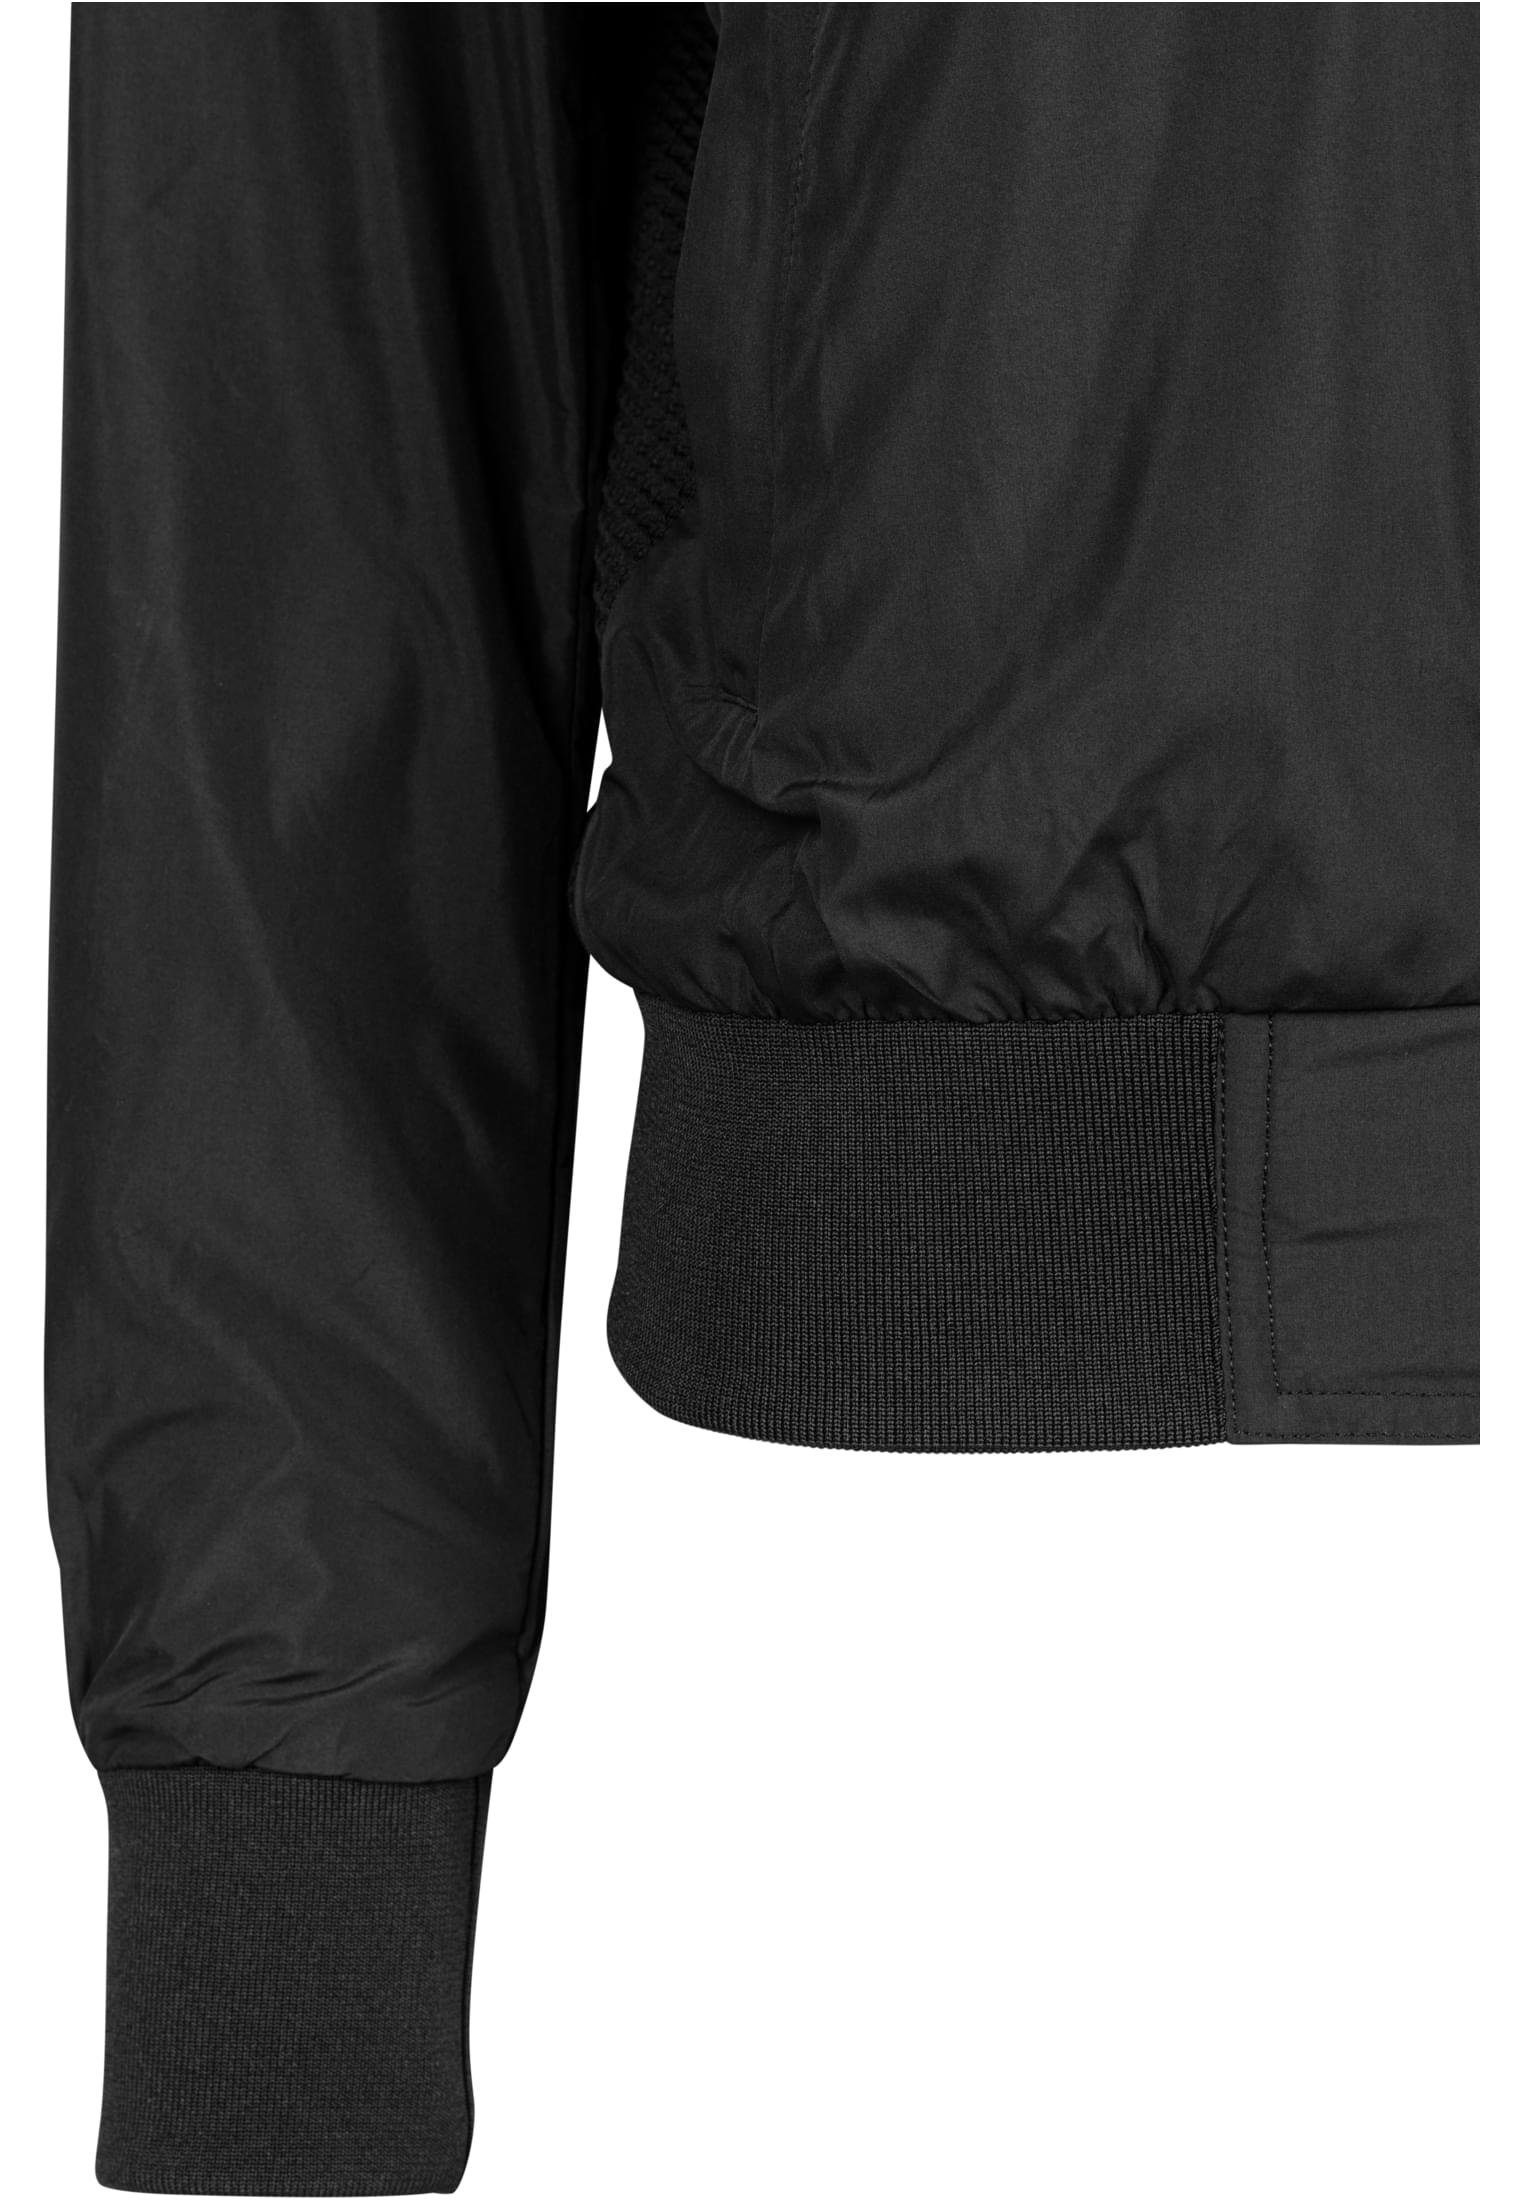 URBAN CLASSICS Outdoorjacke Damen Ladies Light black Jacket Bomber (1-St)